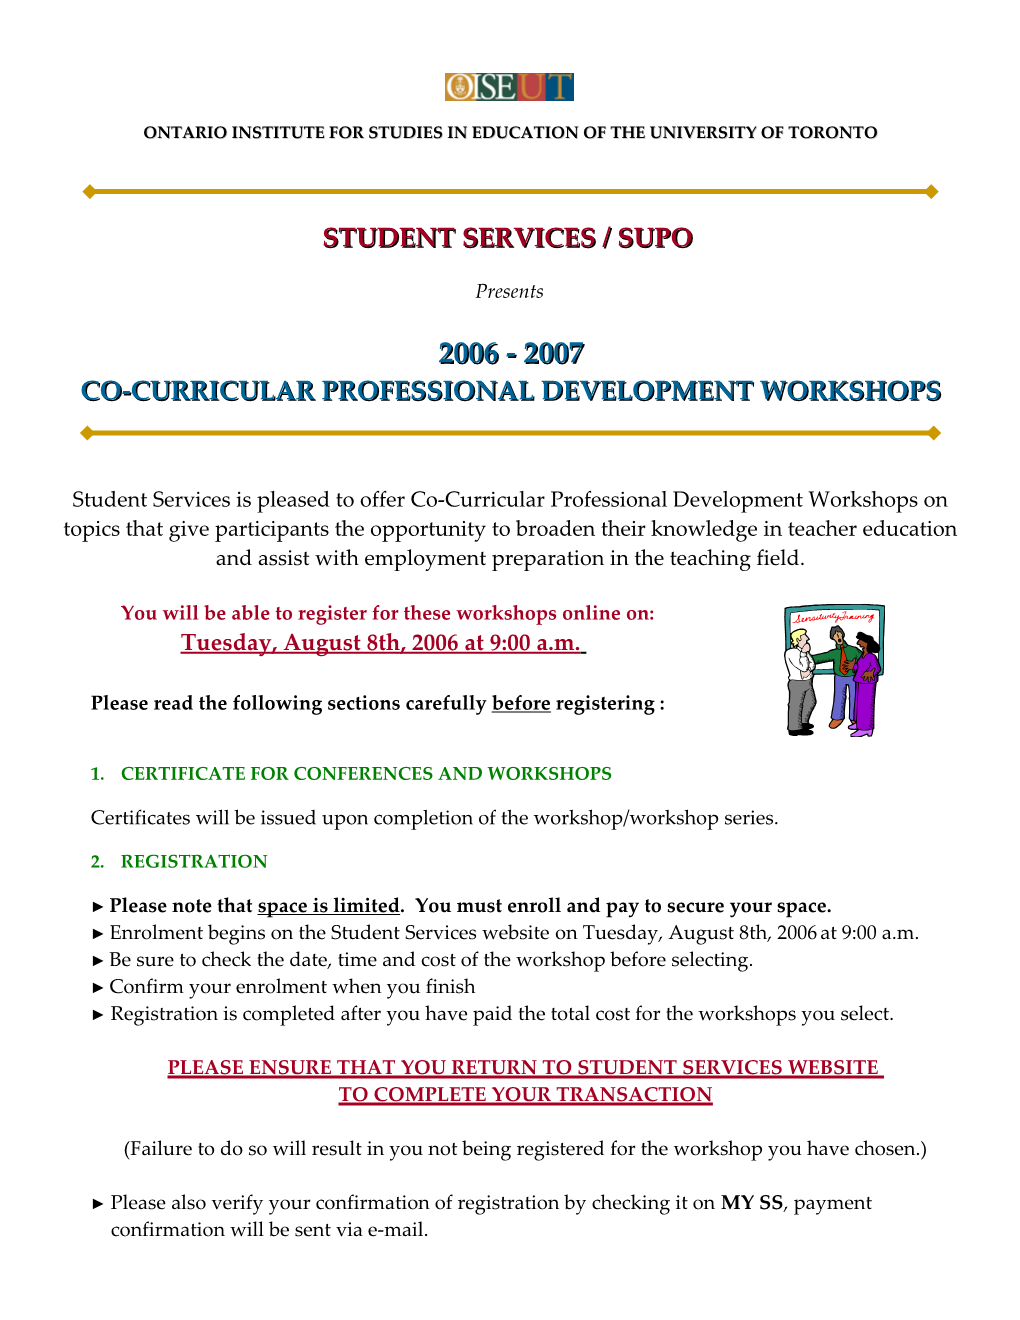 Co-Curricular Professional Development Workshops s1